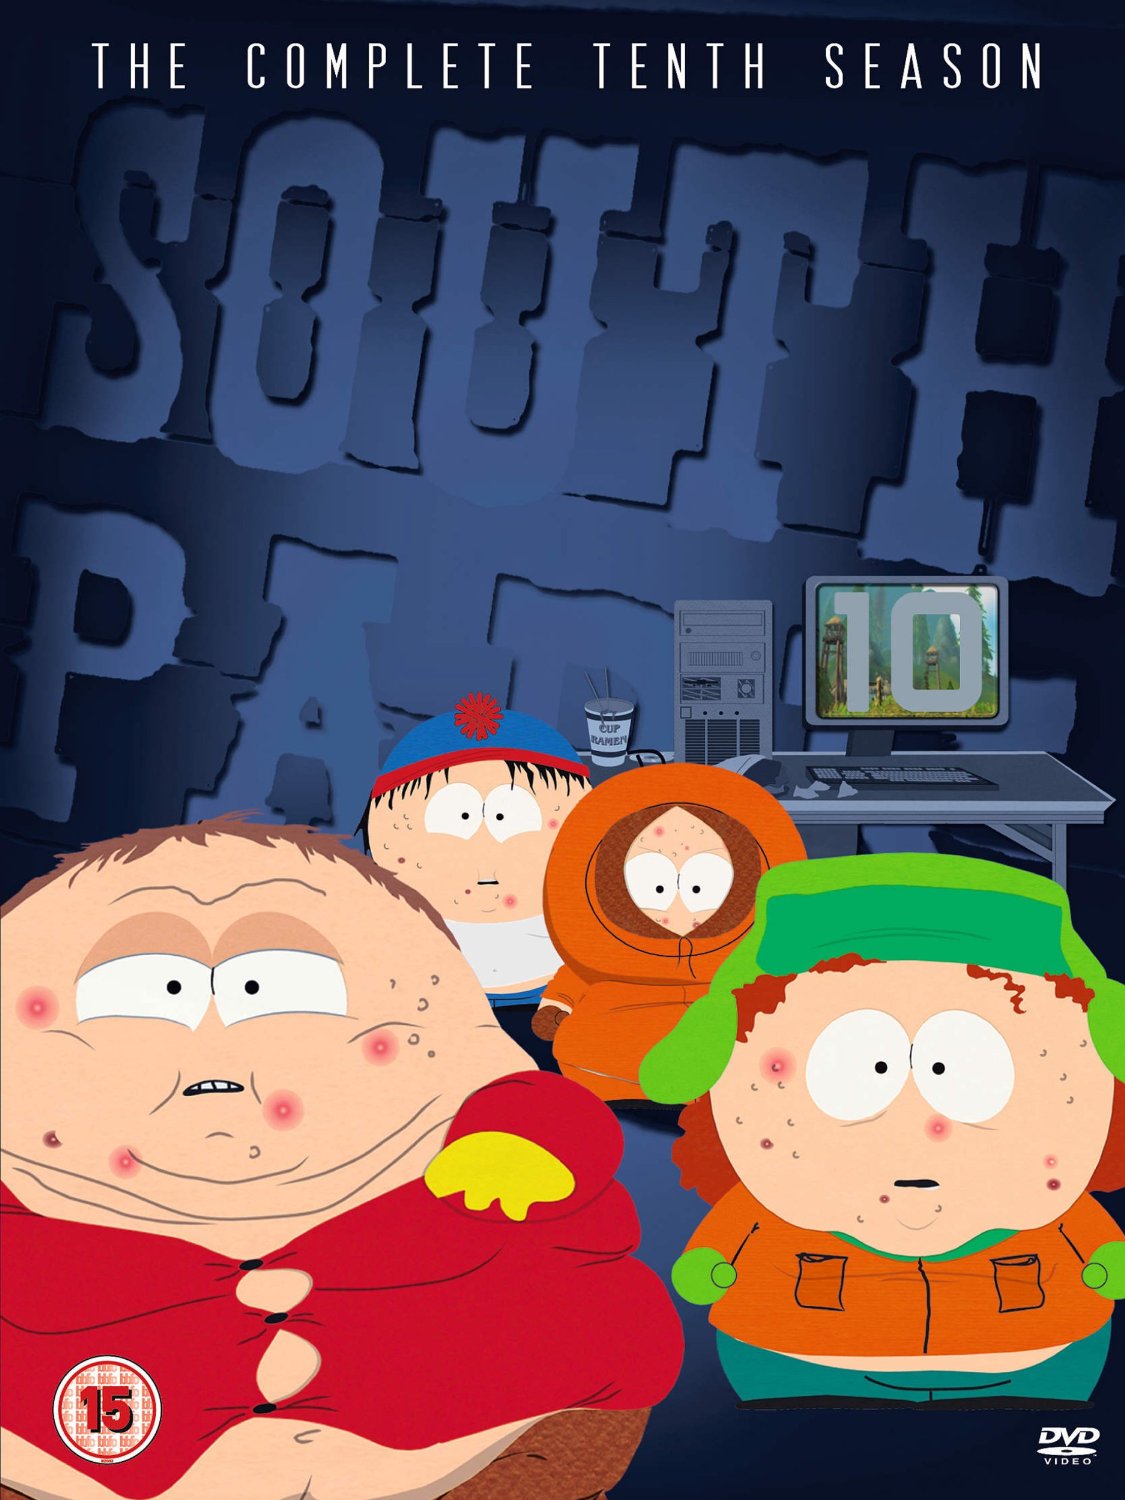 South Park Season 10 (2006)